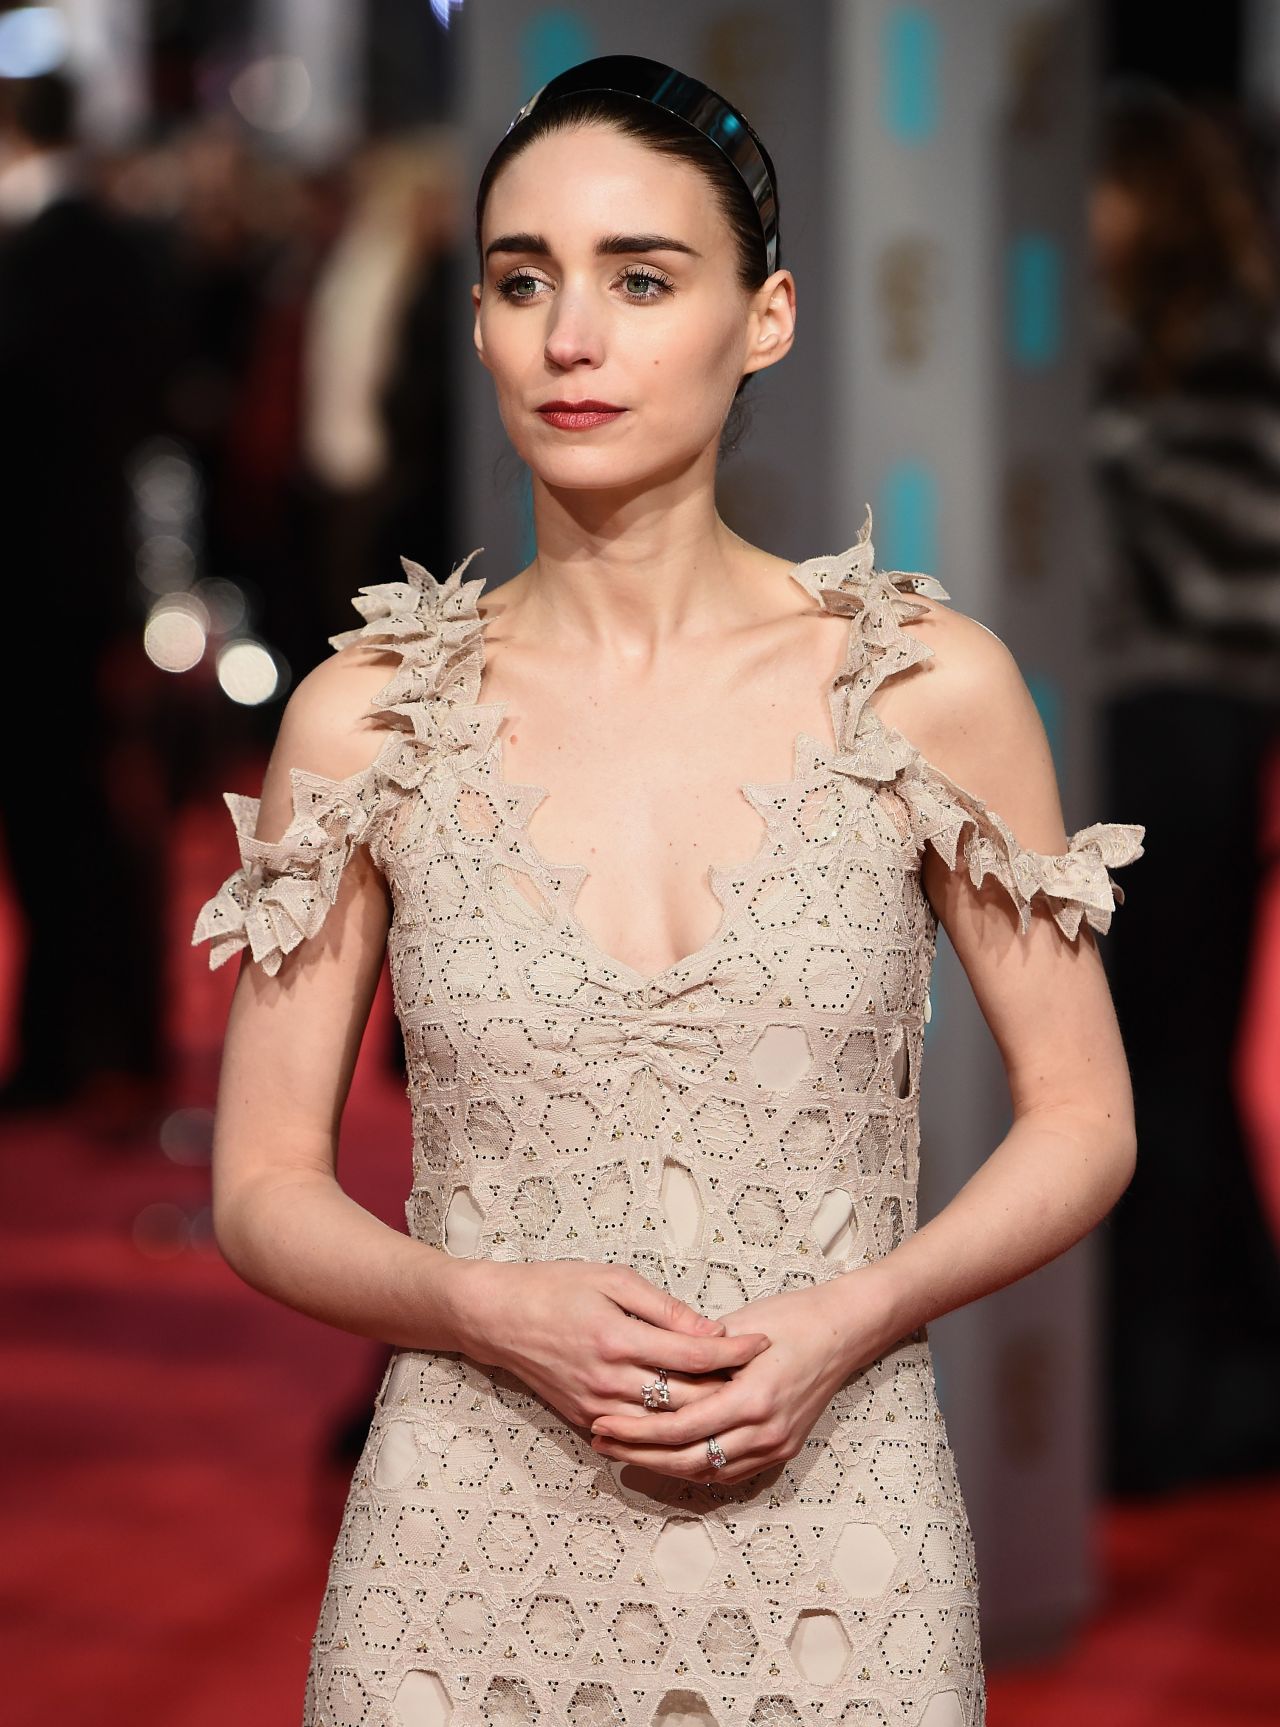 Rooney Mara – BAFTA Film Awards 2016 in London